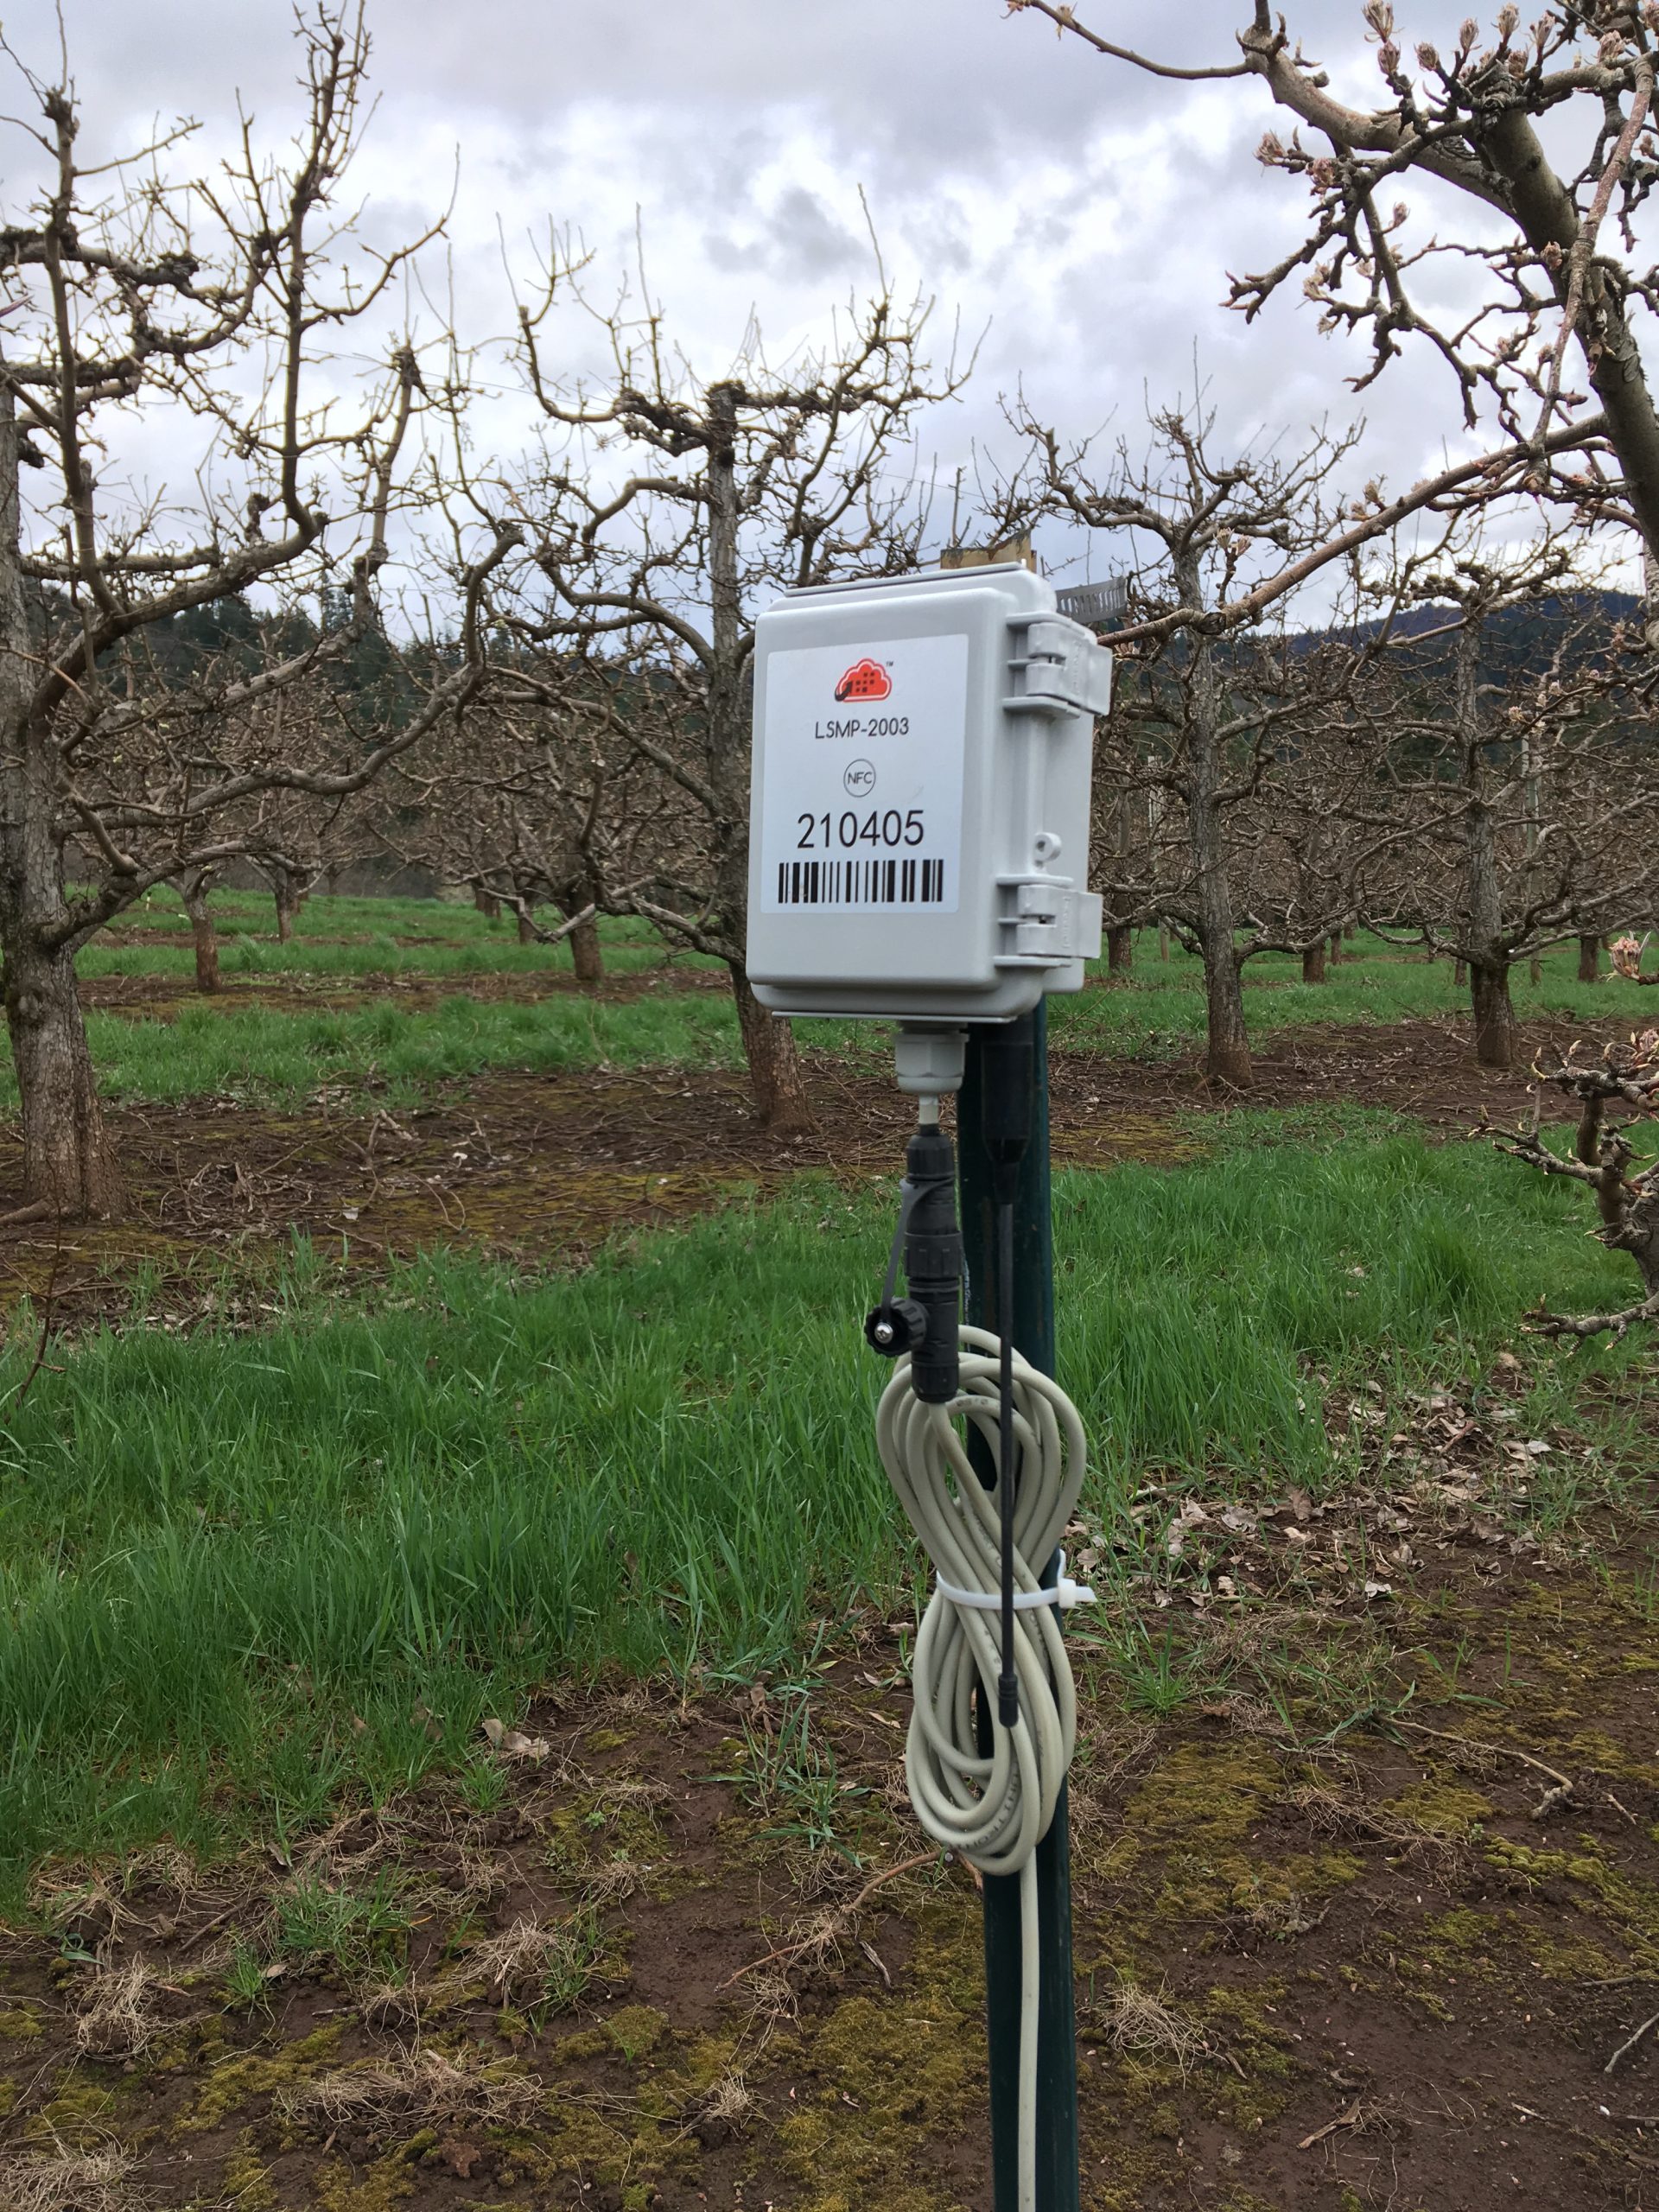 orchard soil moisture monitoring telemetry with Zenseio LSMP